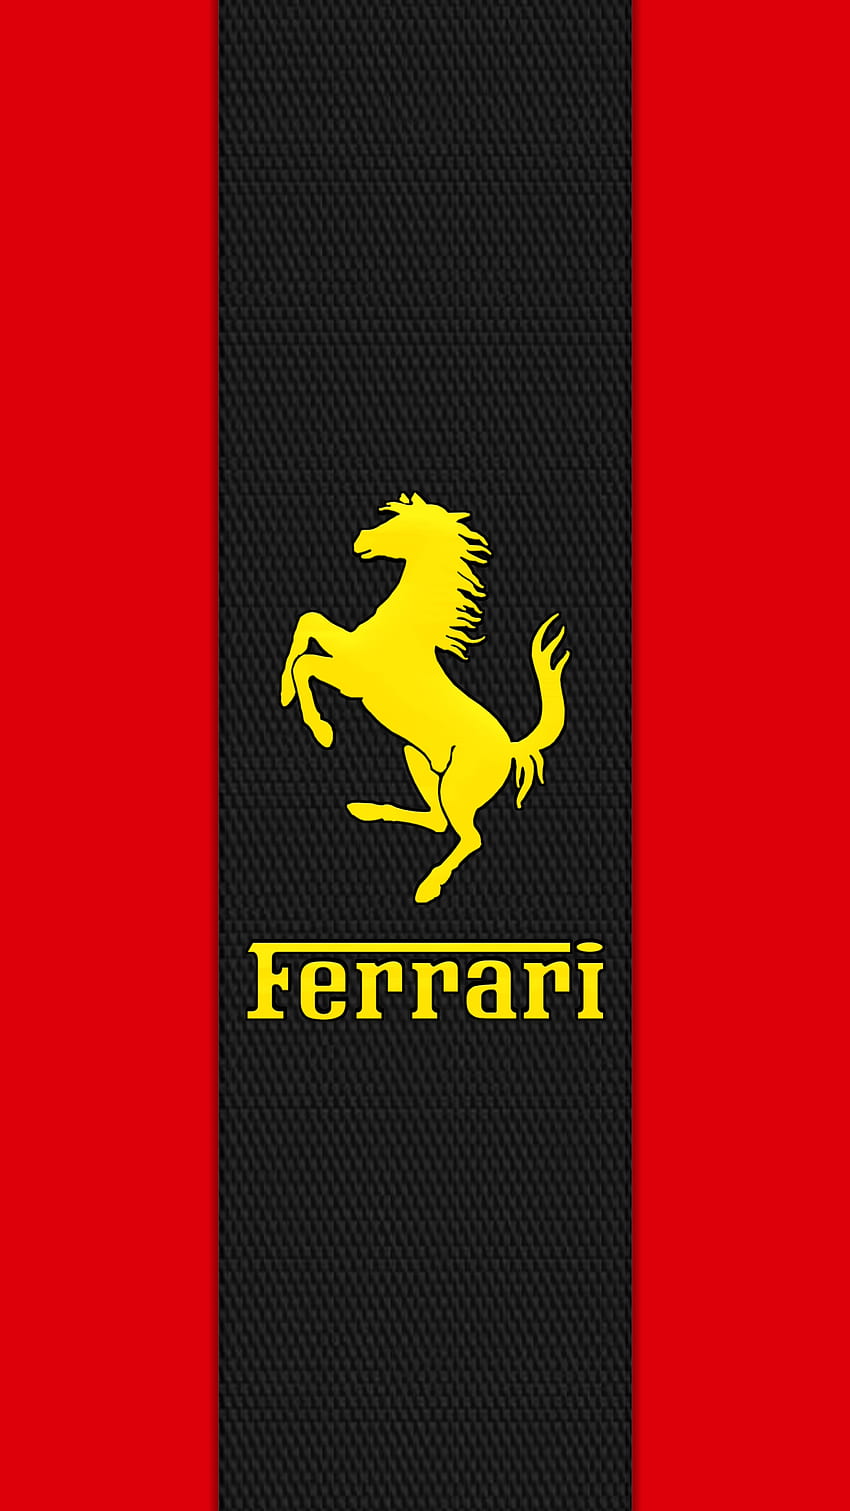 403 Ferrari Badge Stock Photos - Free & Royalty-Free Stock Photos from  Dreamstime